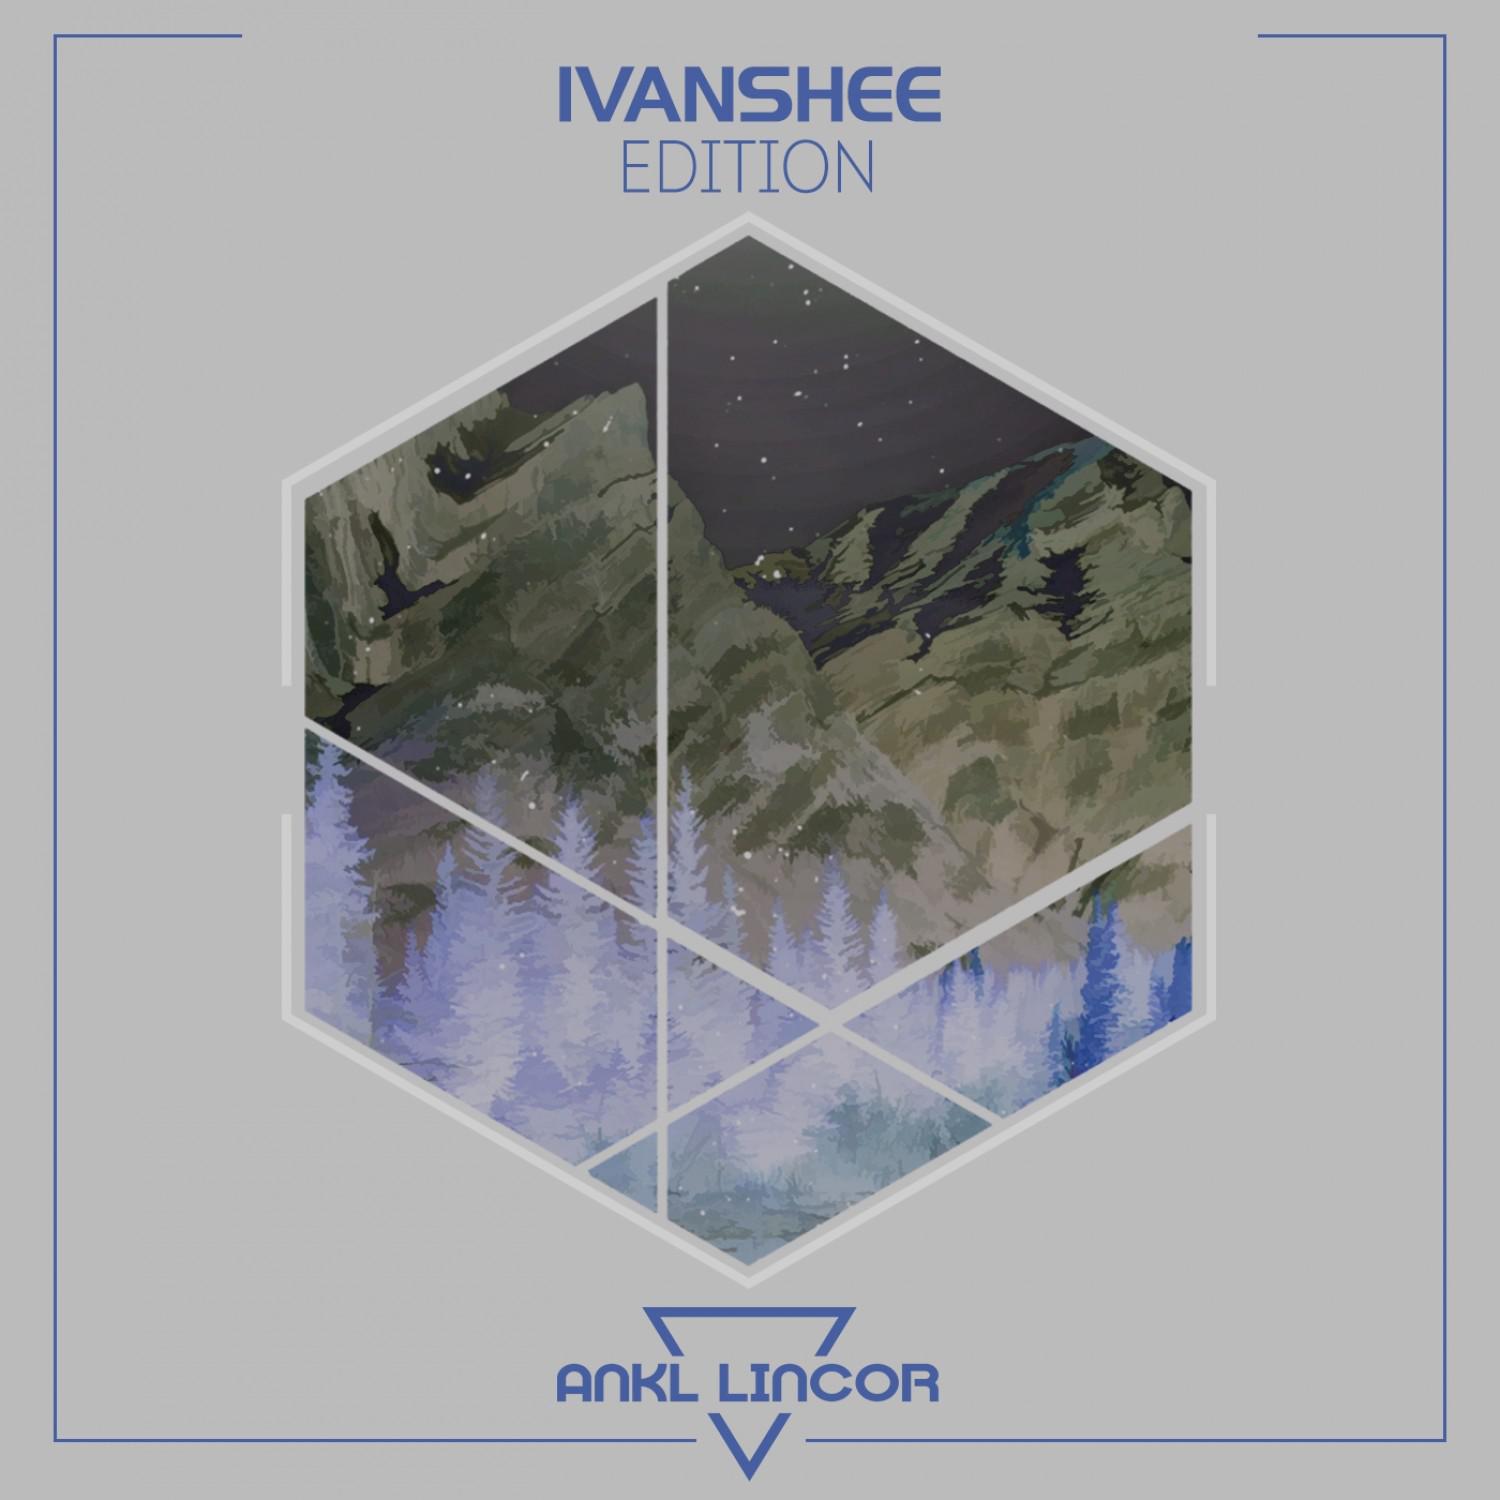 Hierachy Tree (Ivanshee Remix)